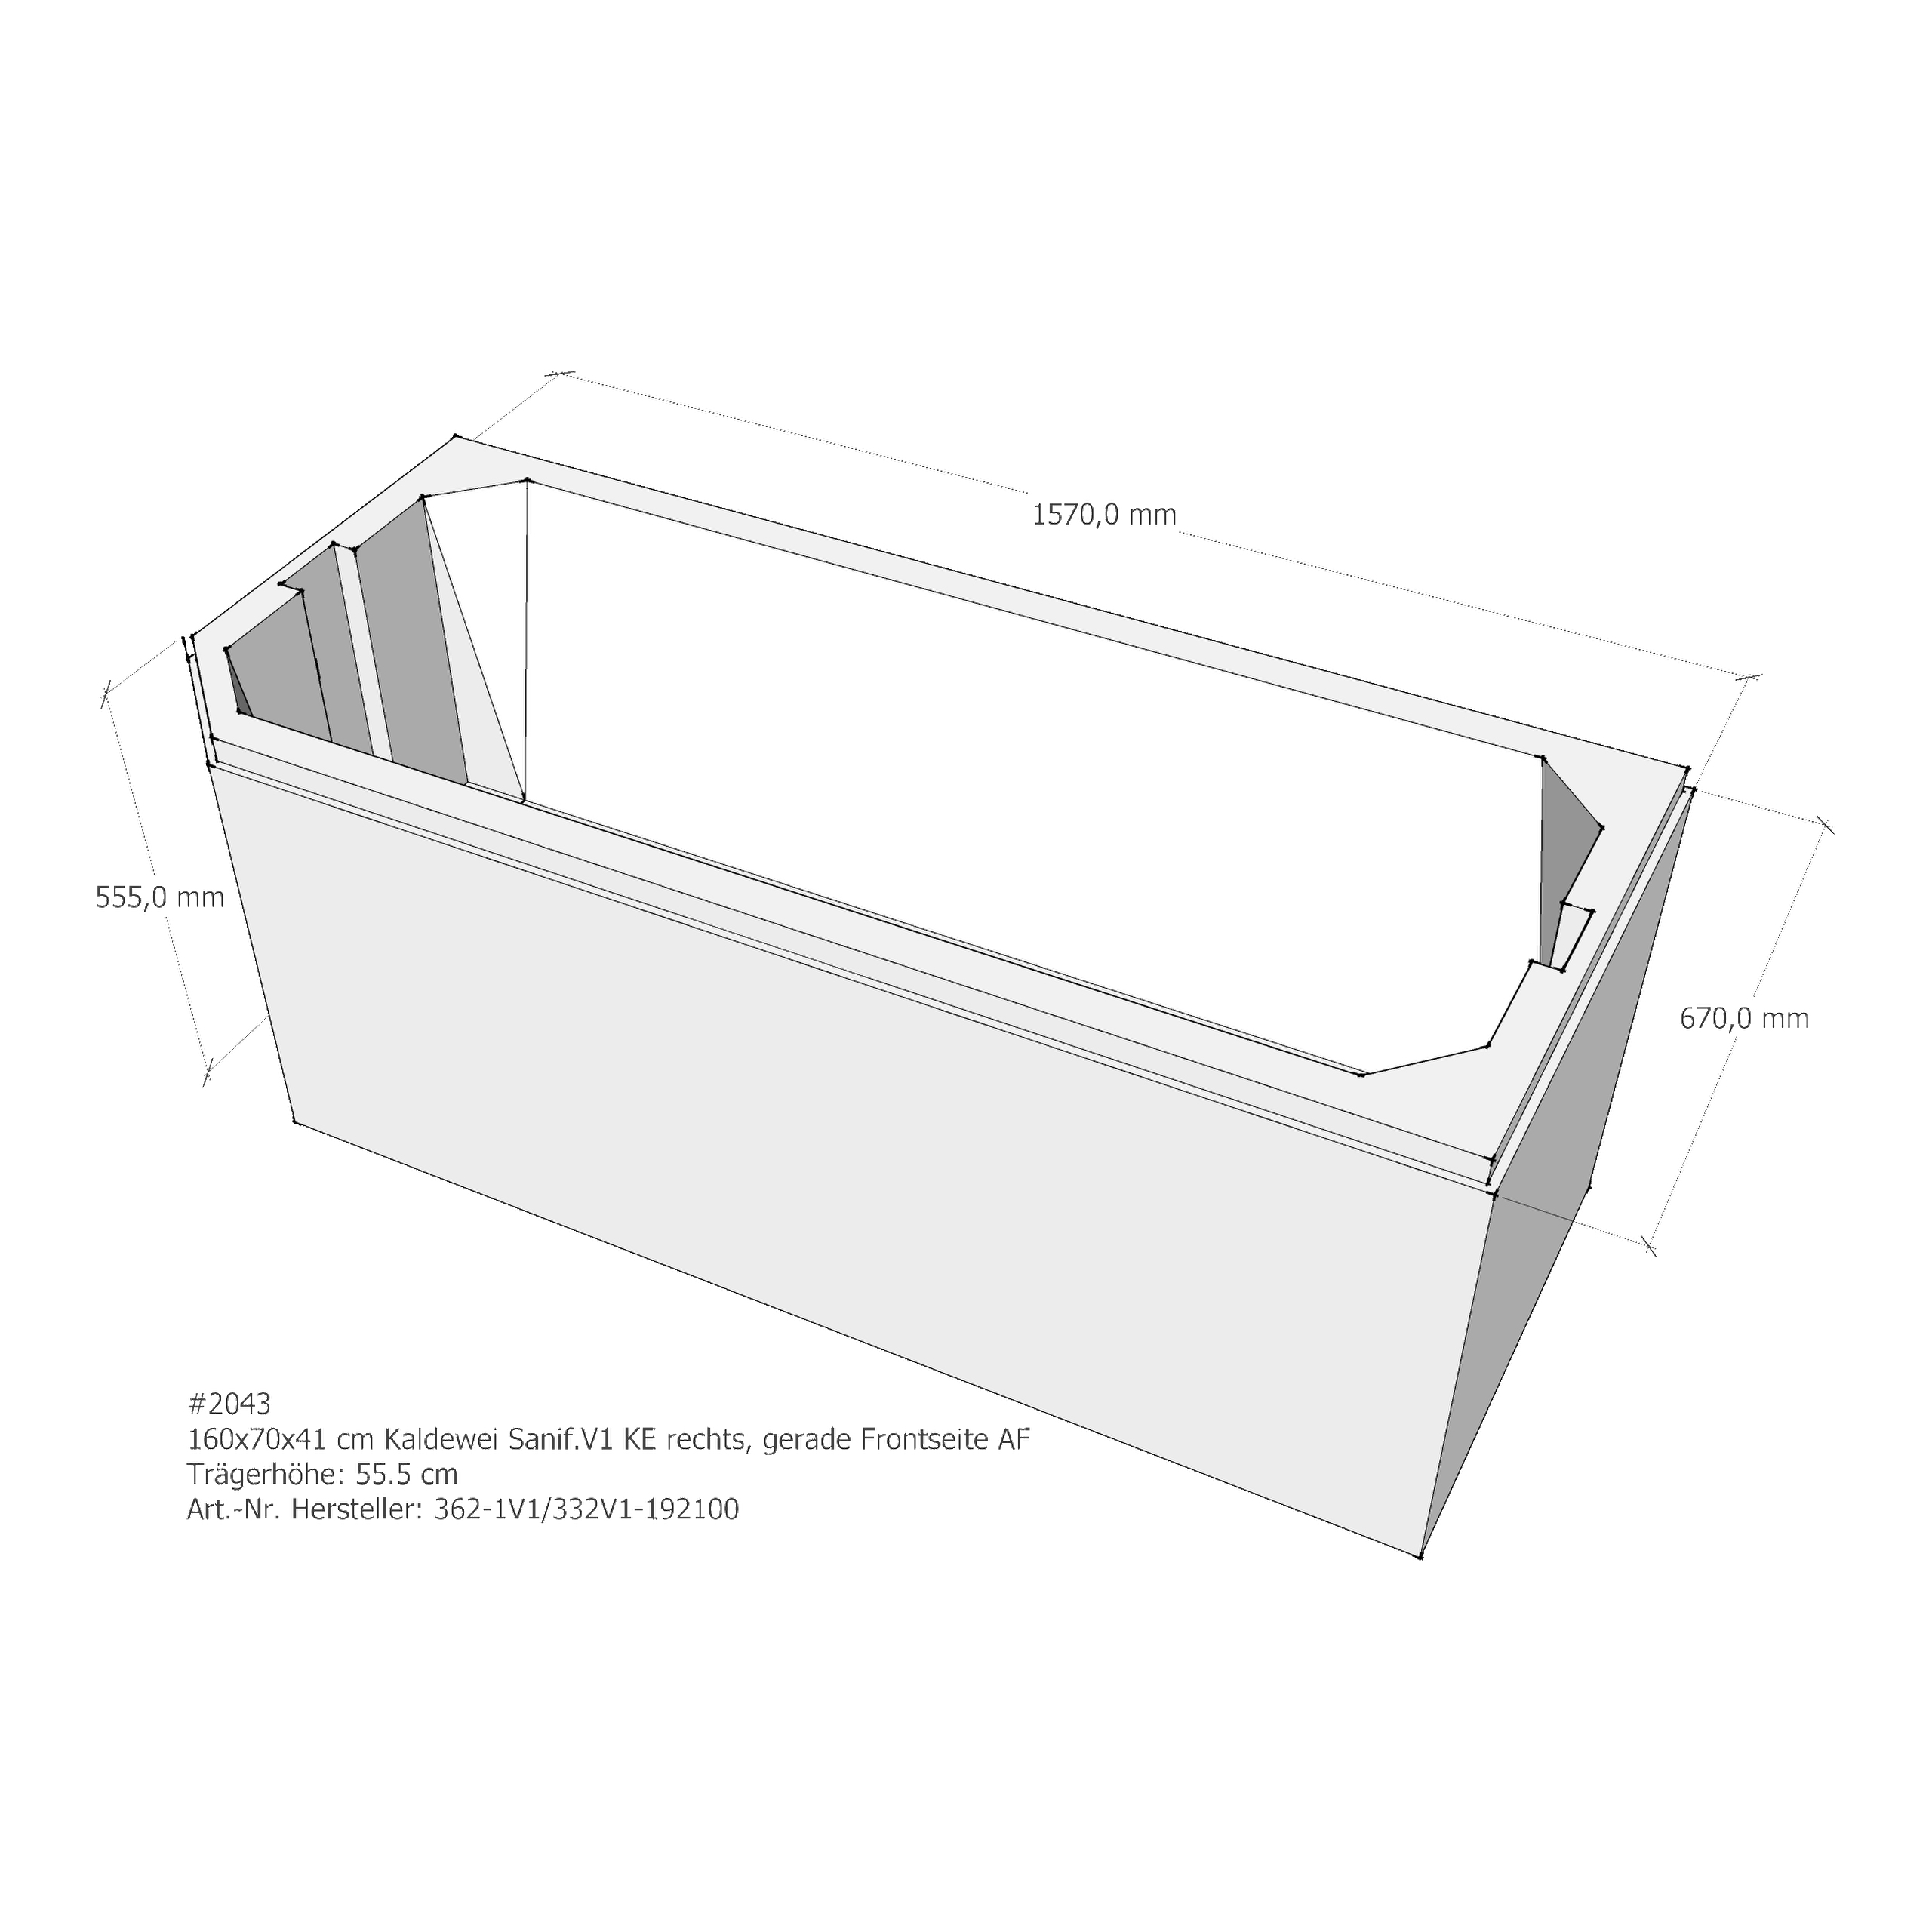 Badewannenträger für Kaldewei Saniform V1 KE rechts 160 × 70 × 41 cm